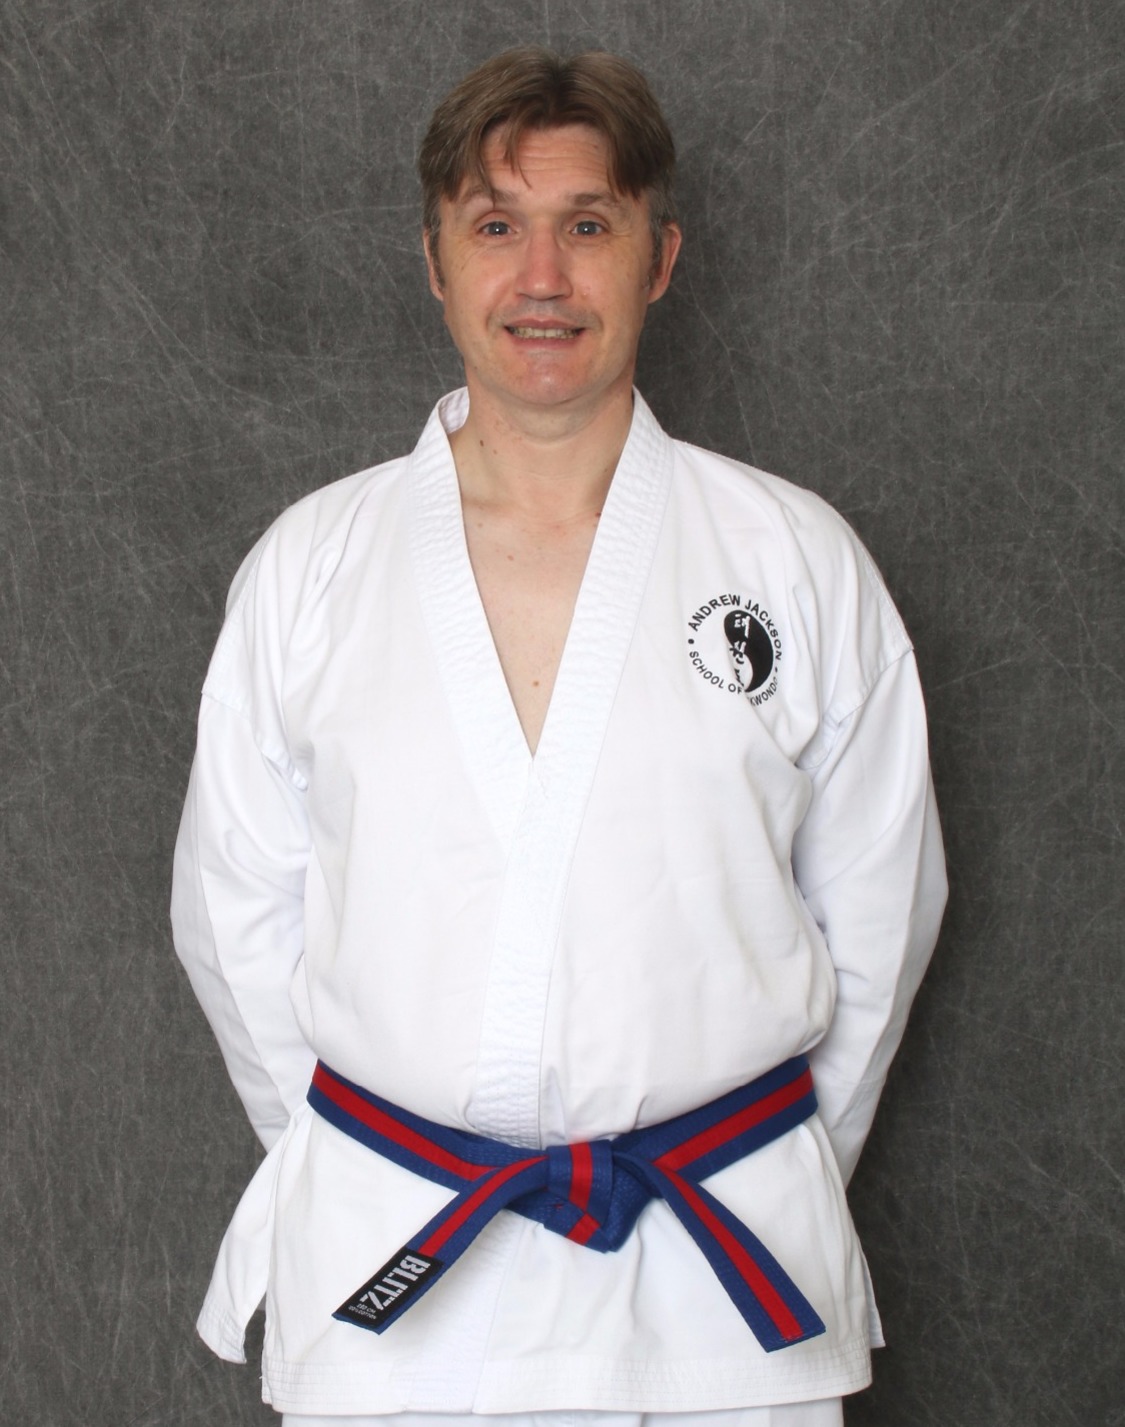 Richard 7th Kup Taekwondo Student